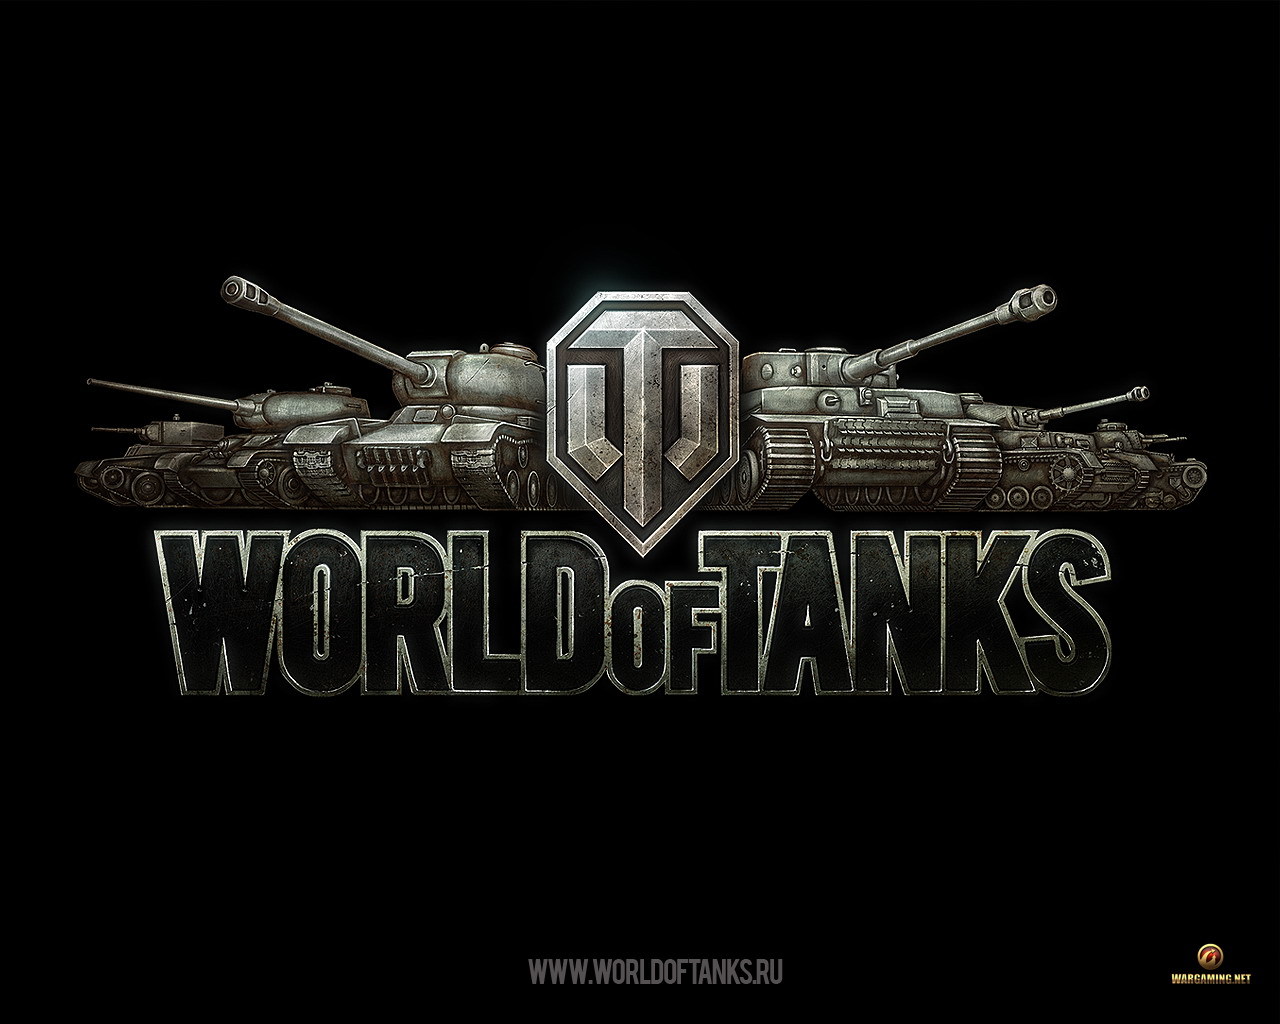 world of tanks, games, background, logos, black phone background